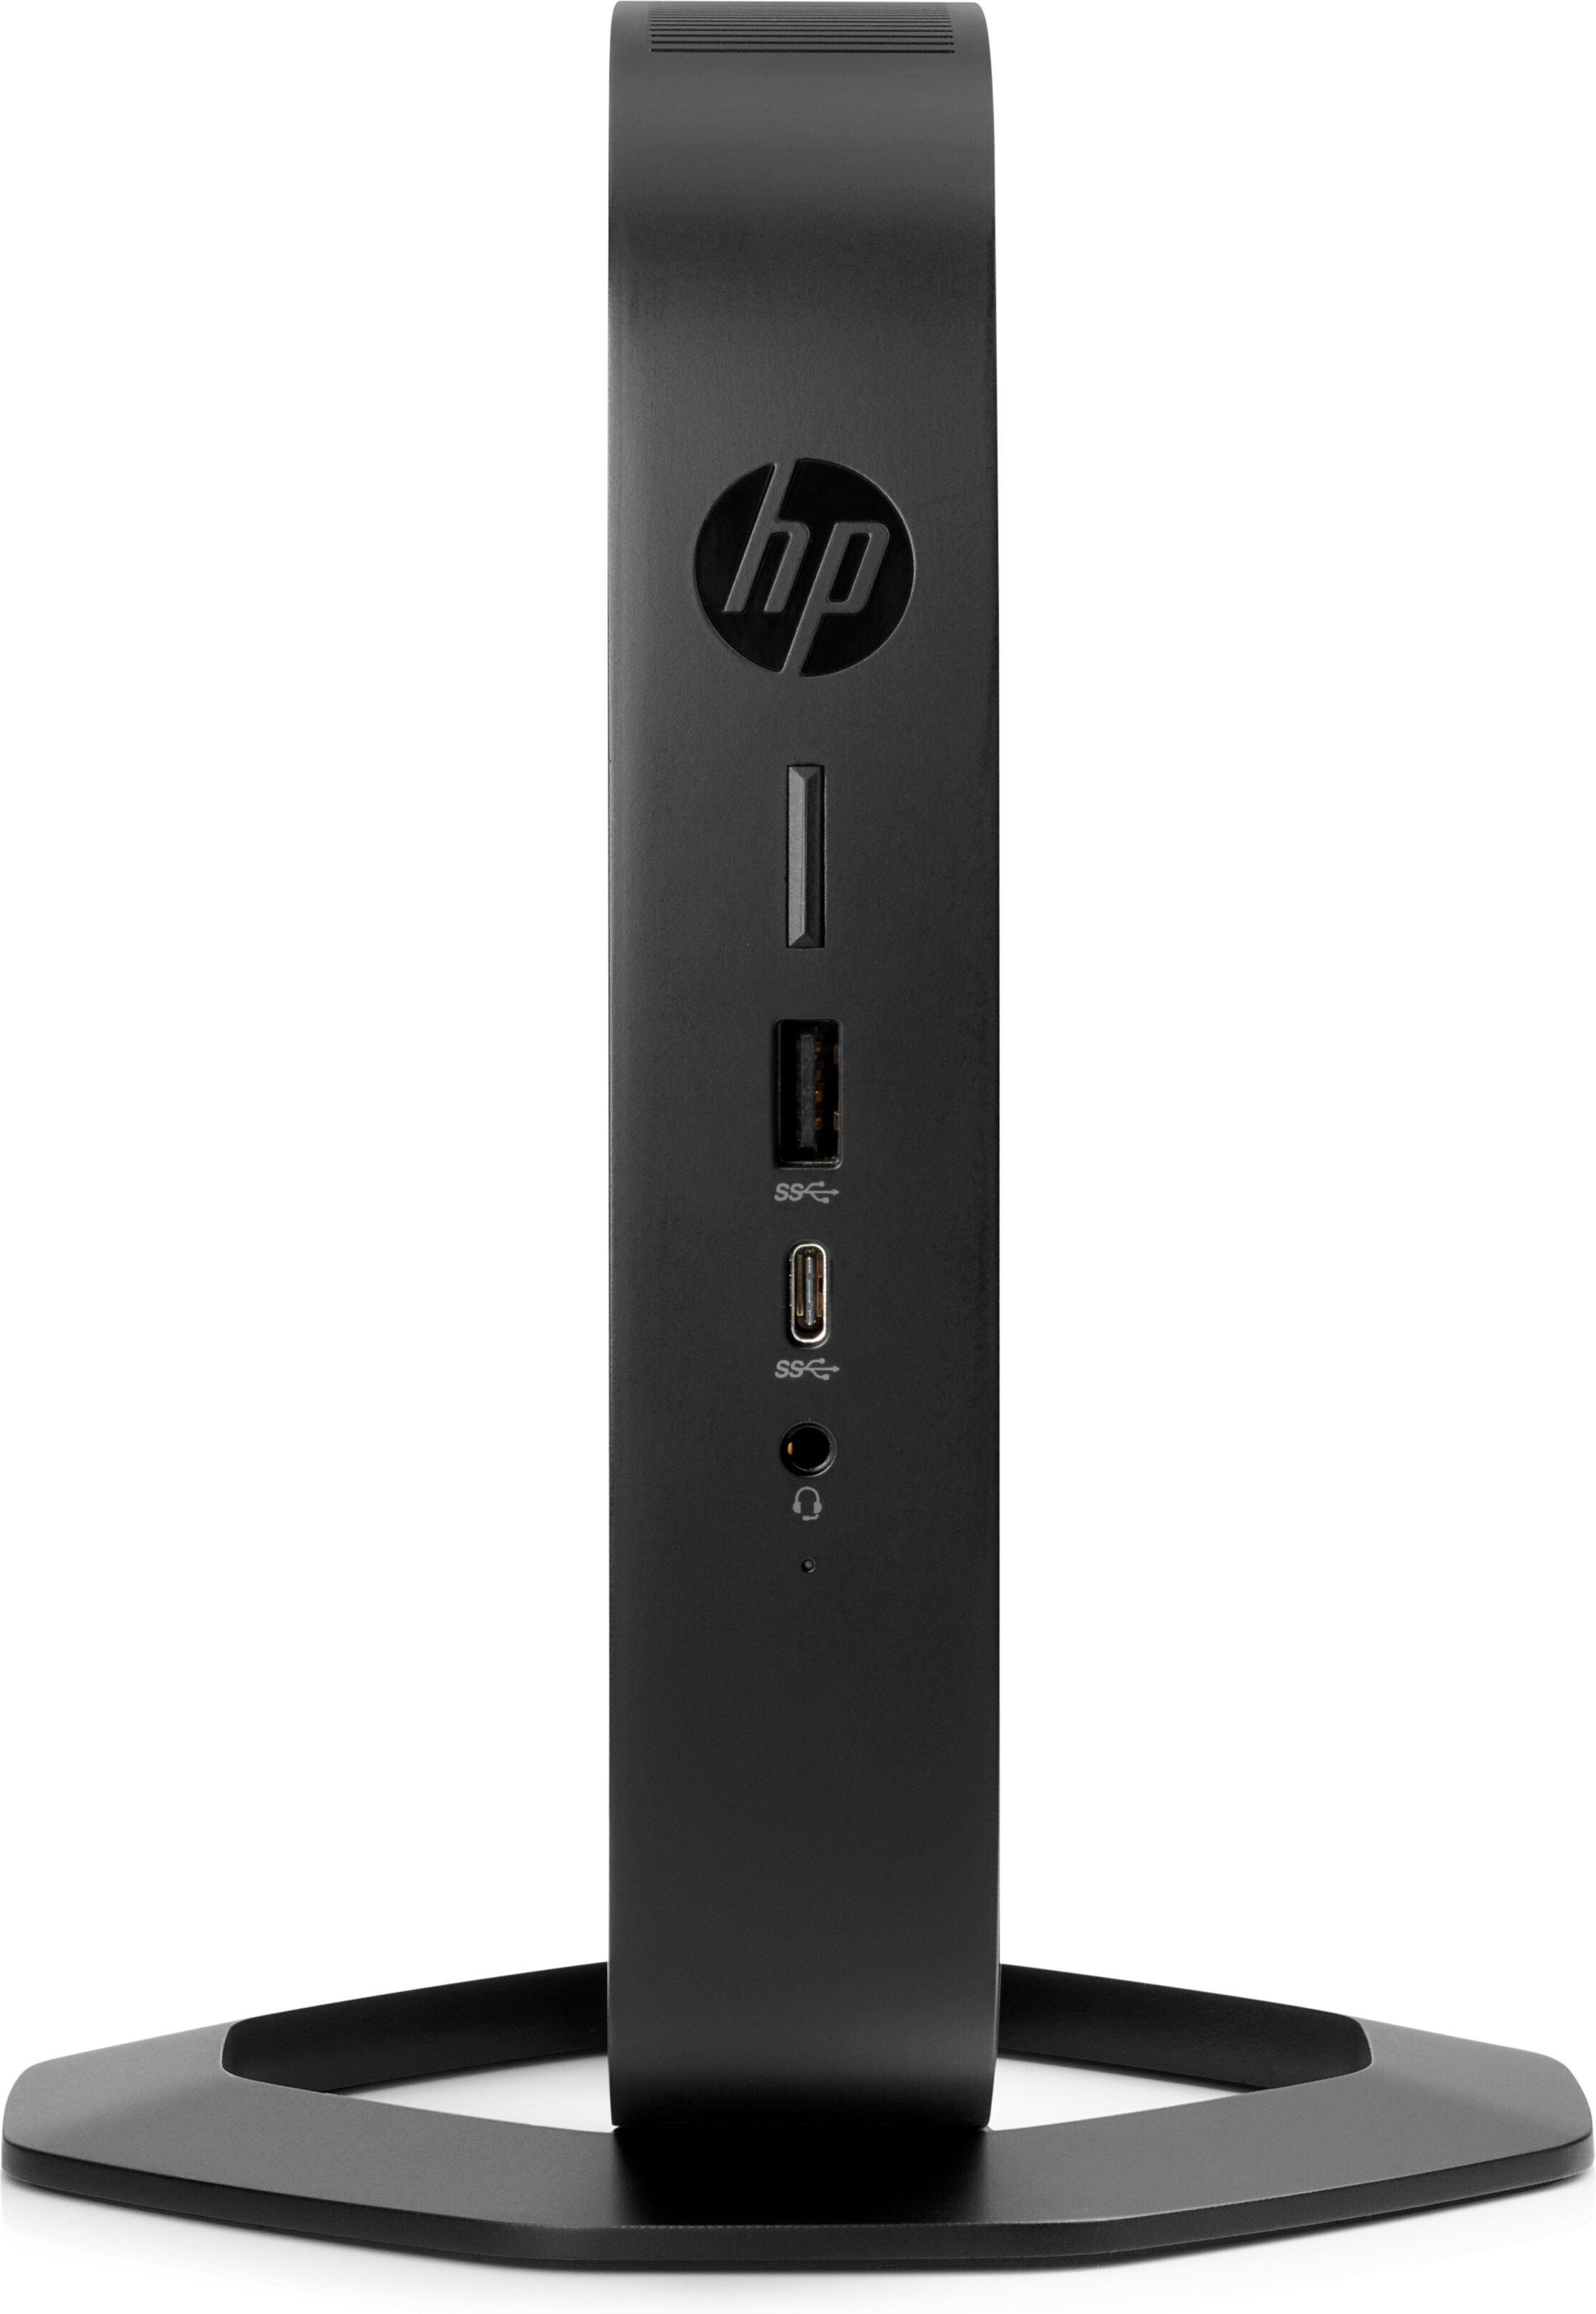 HP t540 1,5 GHz Windows 10 IoT Enterprise 1,4 kg Nero R1305G [1X7P2AA#ABD]